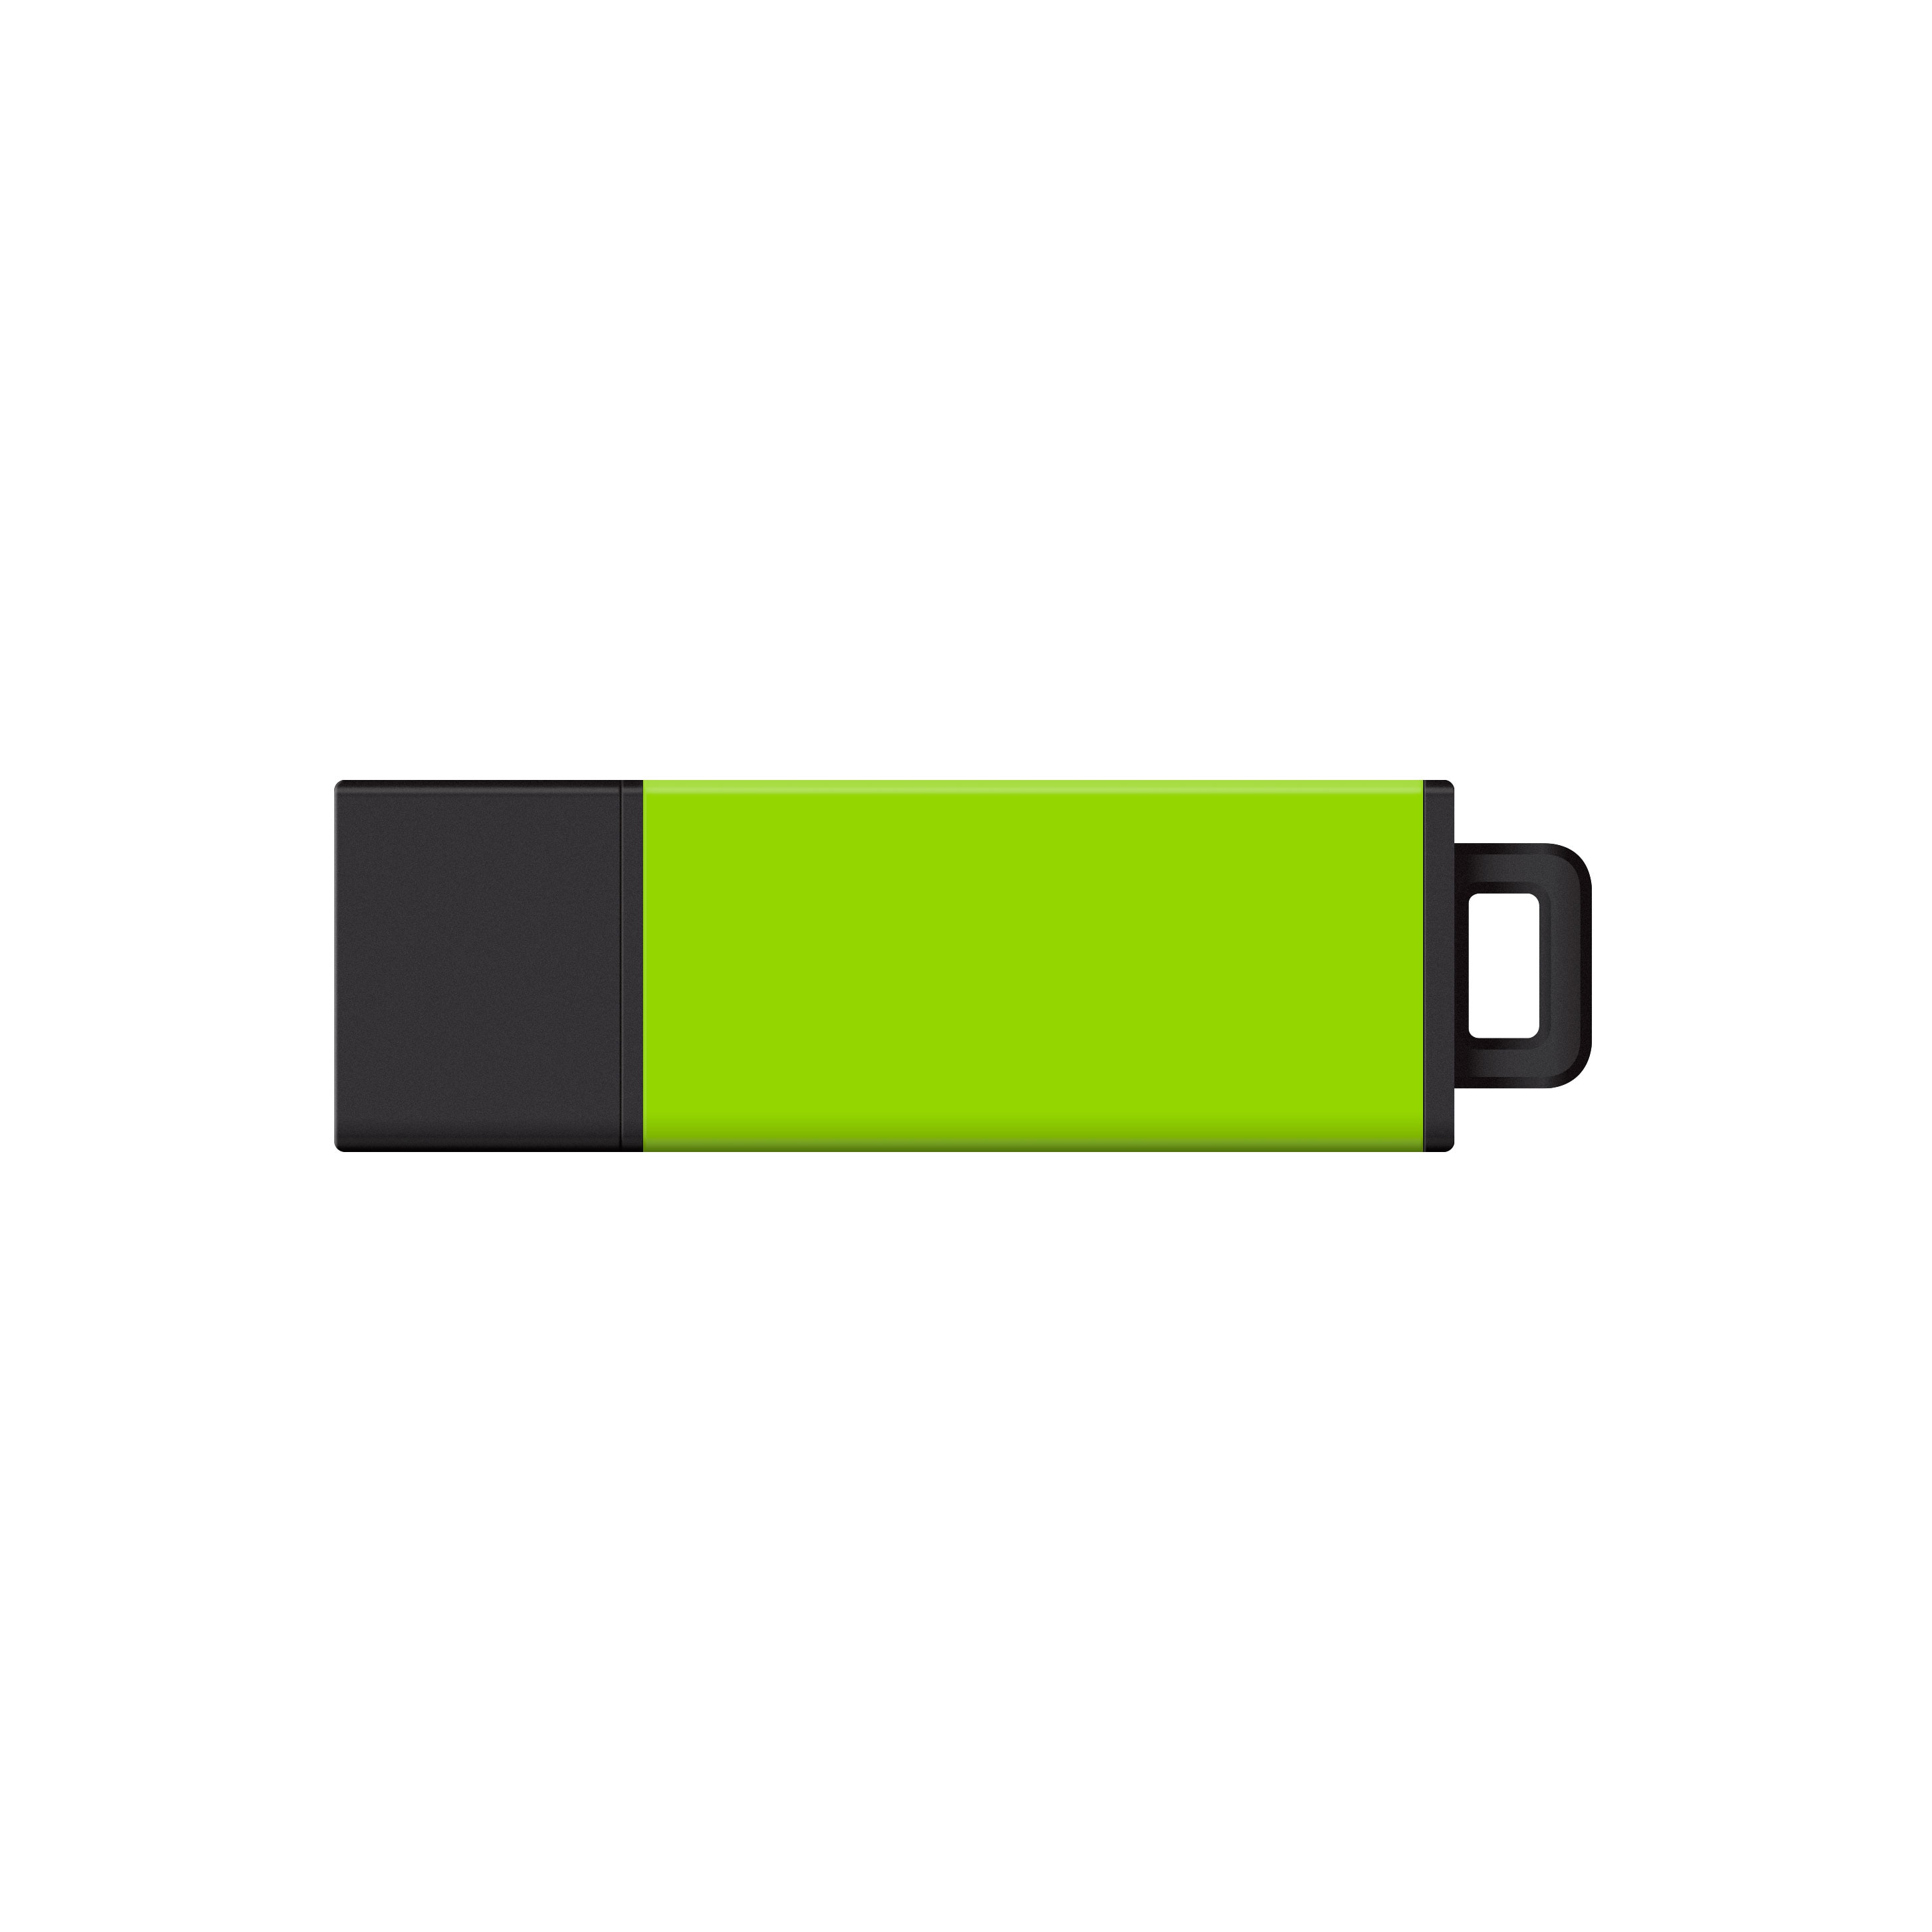 DataStick Pro2 USB 3.0, 32GB- Lime Green